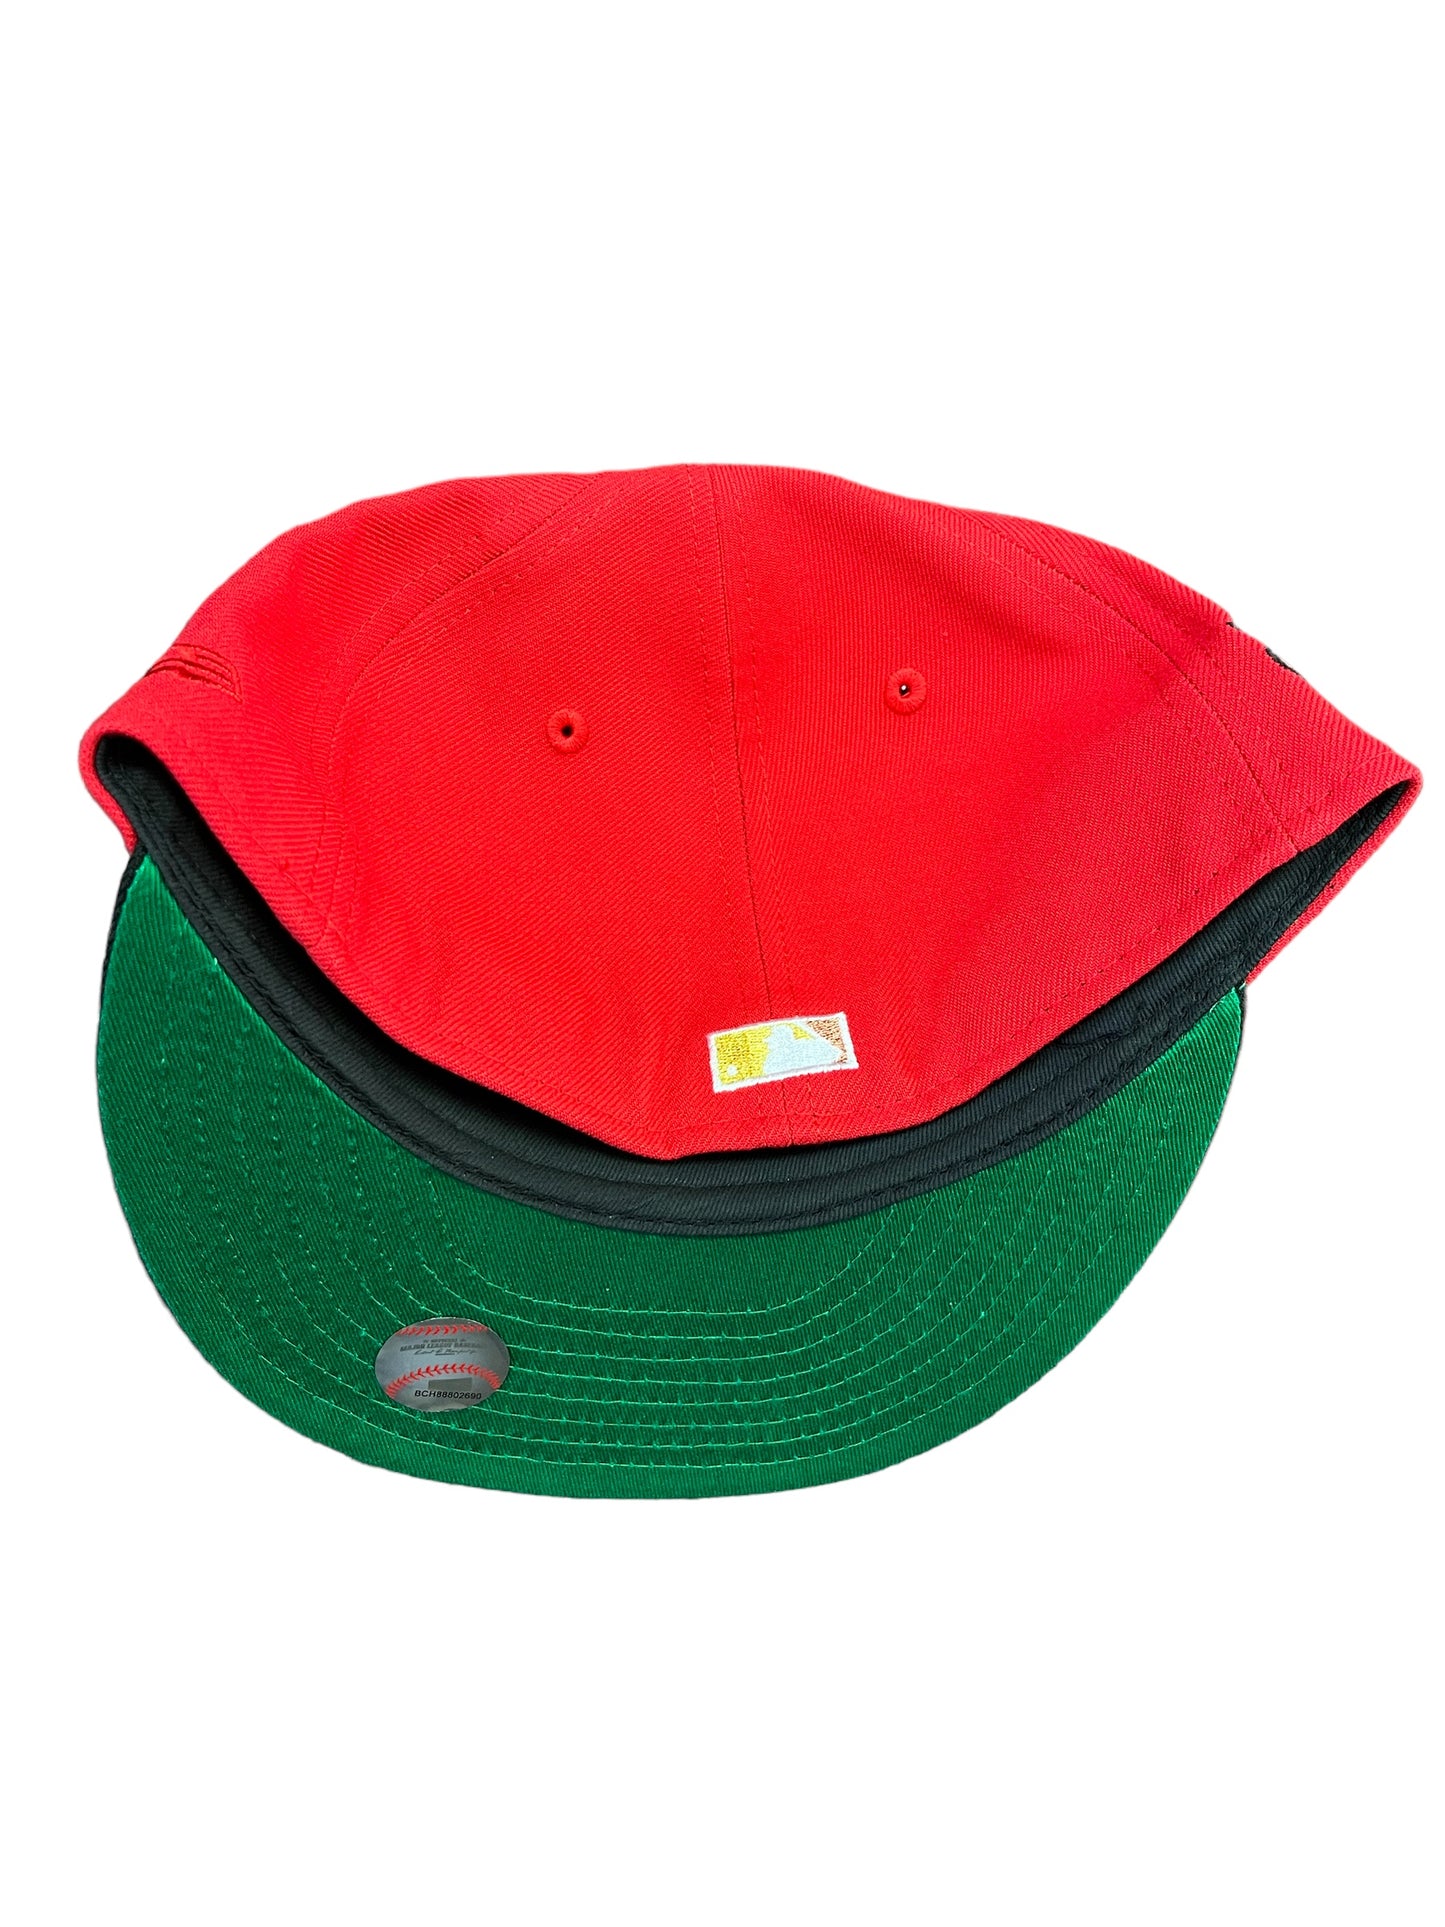 Houston Astros “Red / Black” Hat